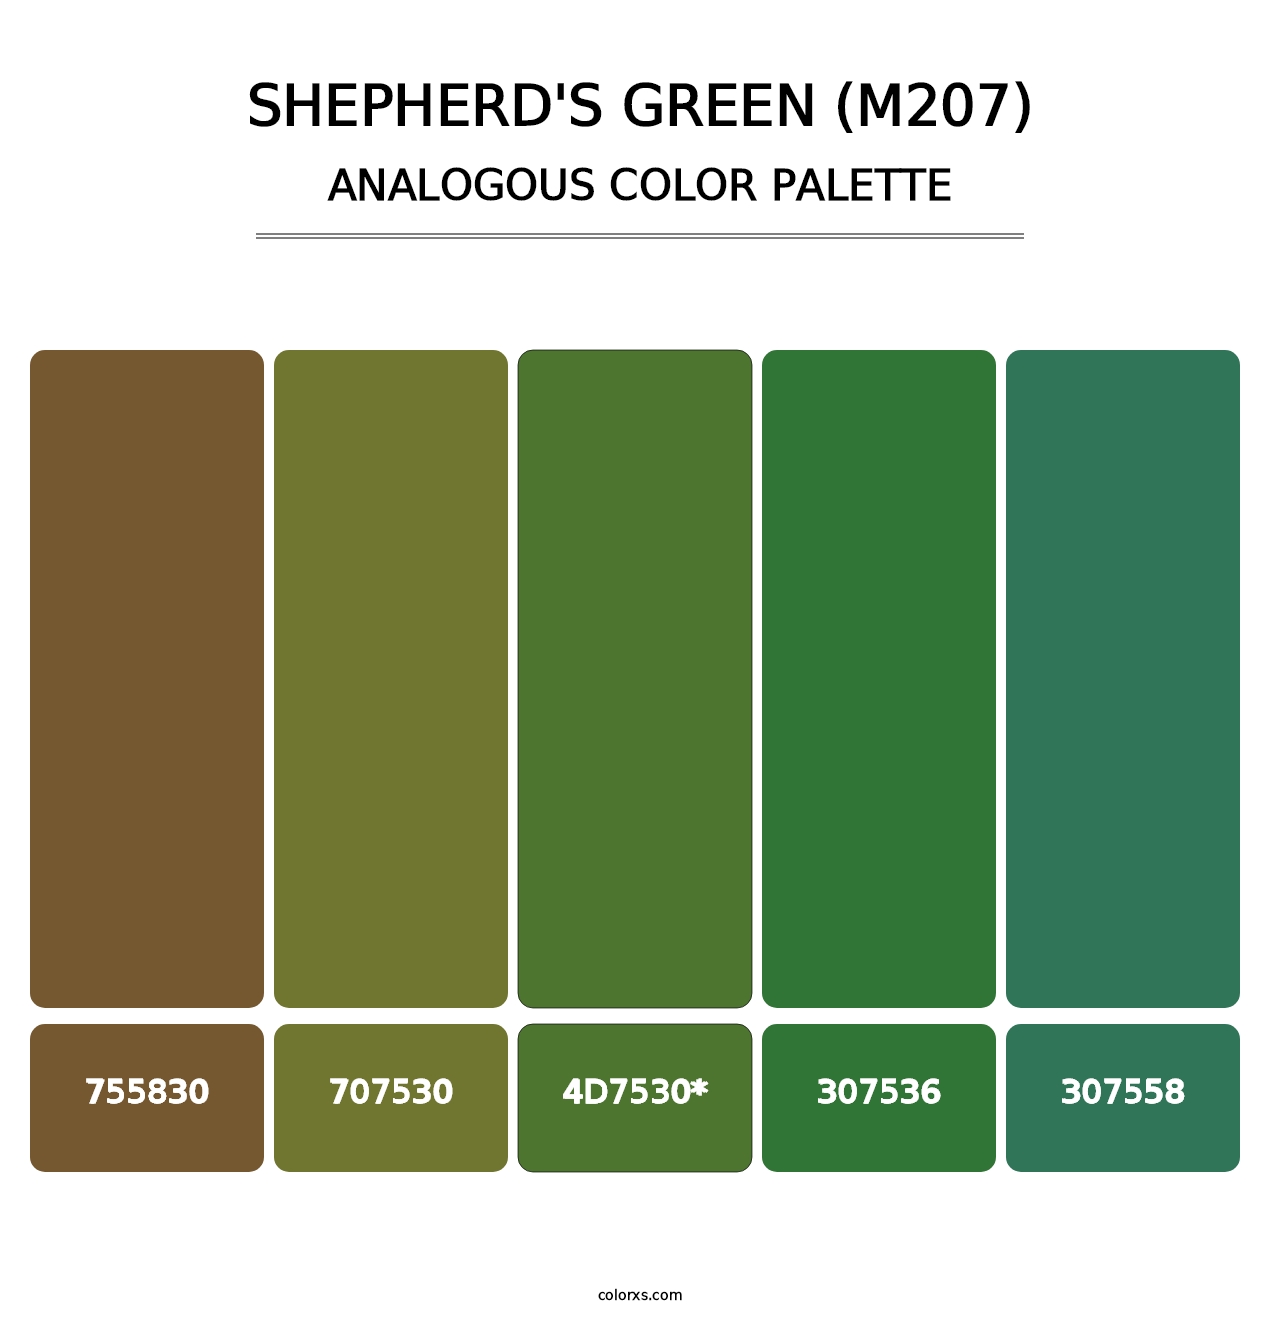 Shepherd's Green (M207) - Analogous Color Palette